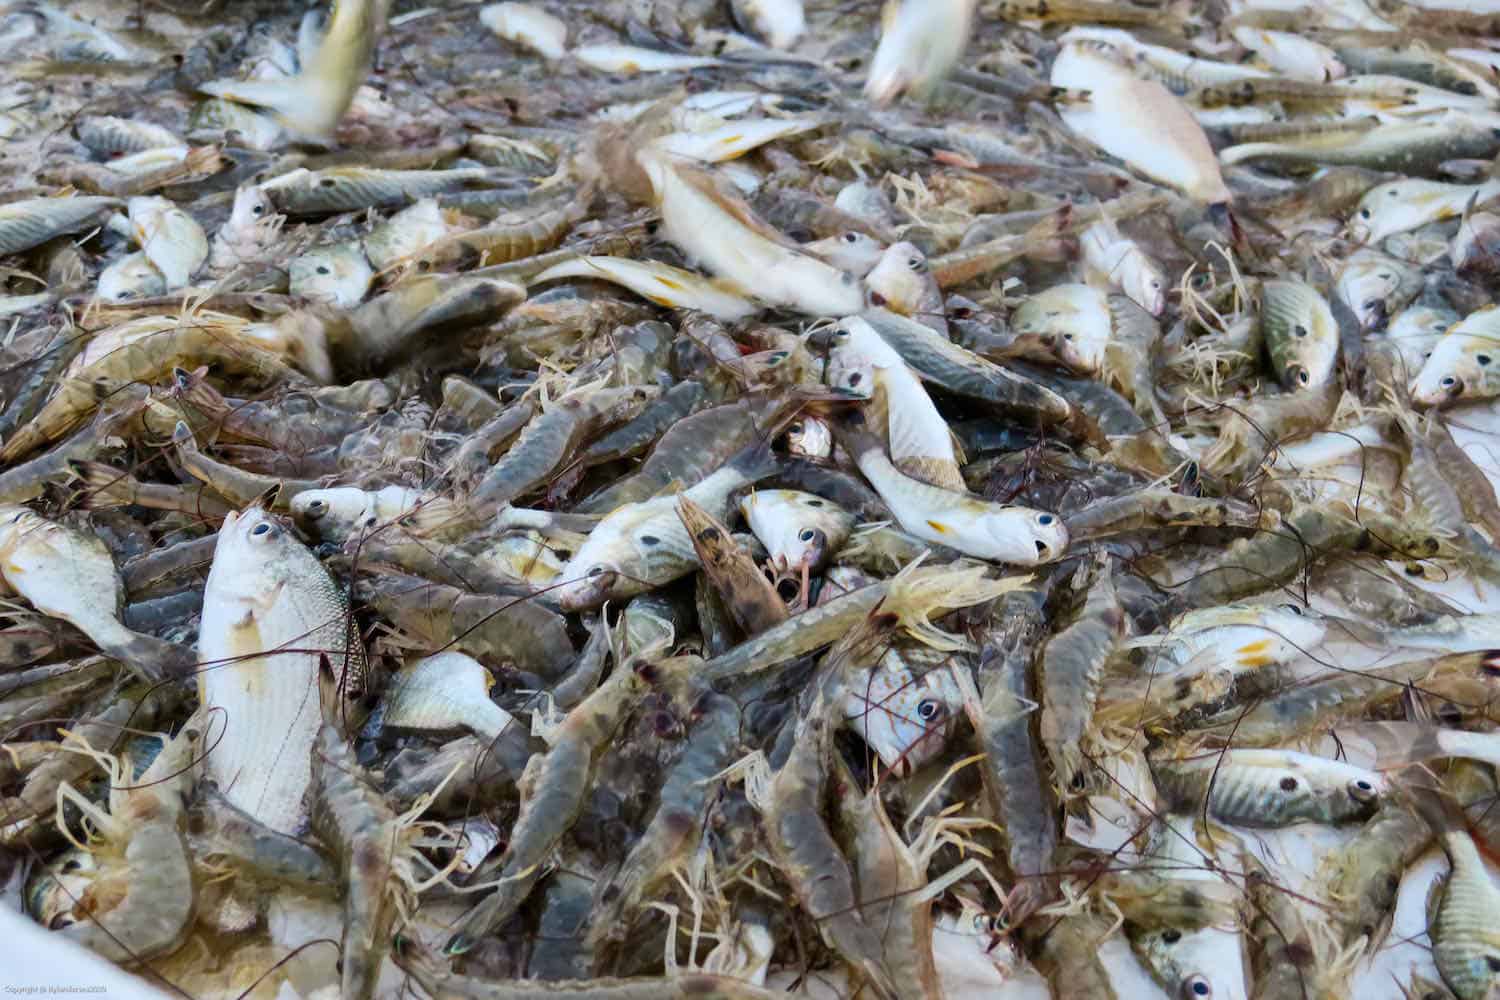 Pile of shrimp on a boat